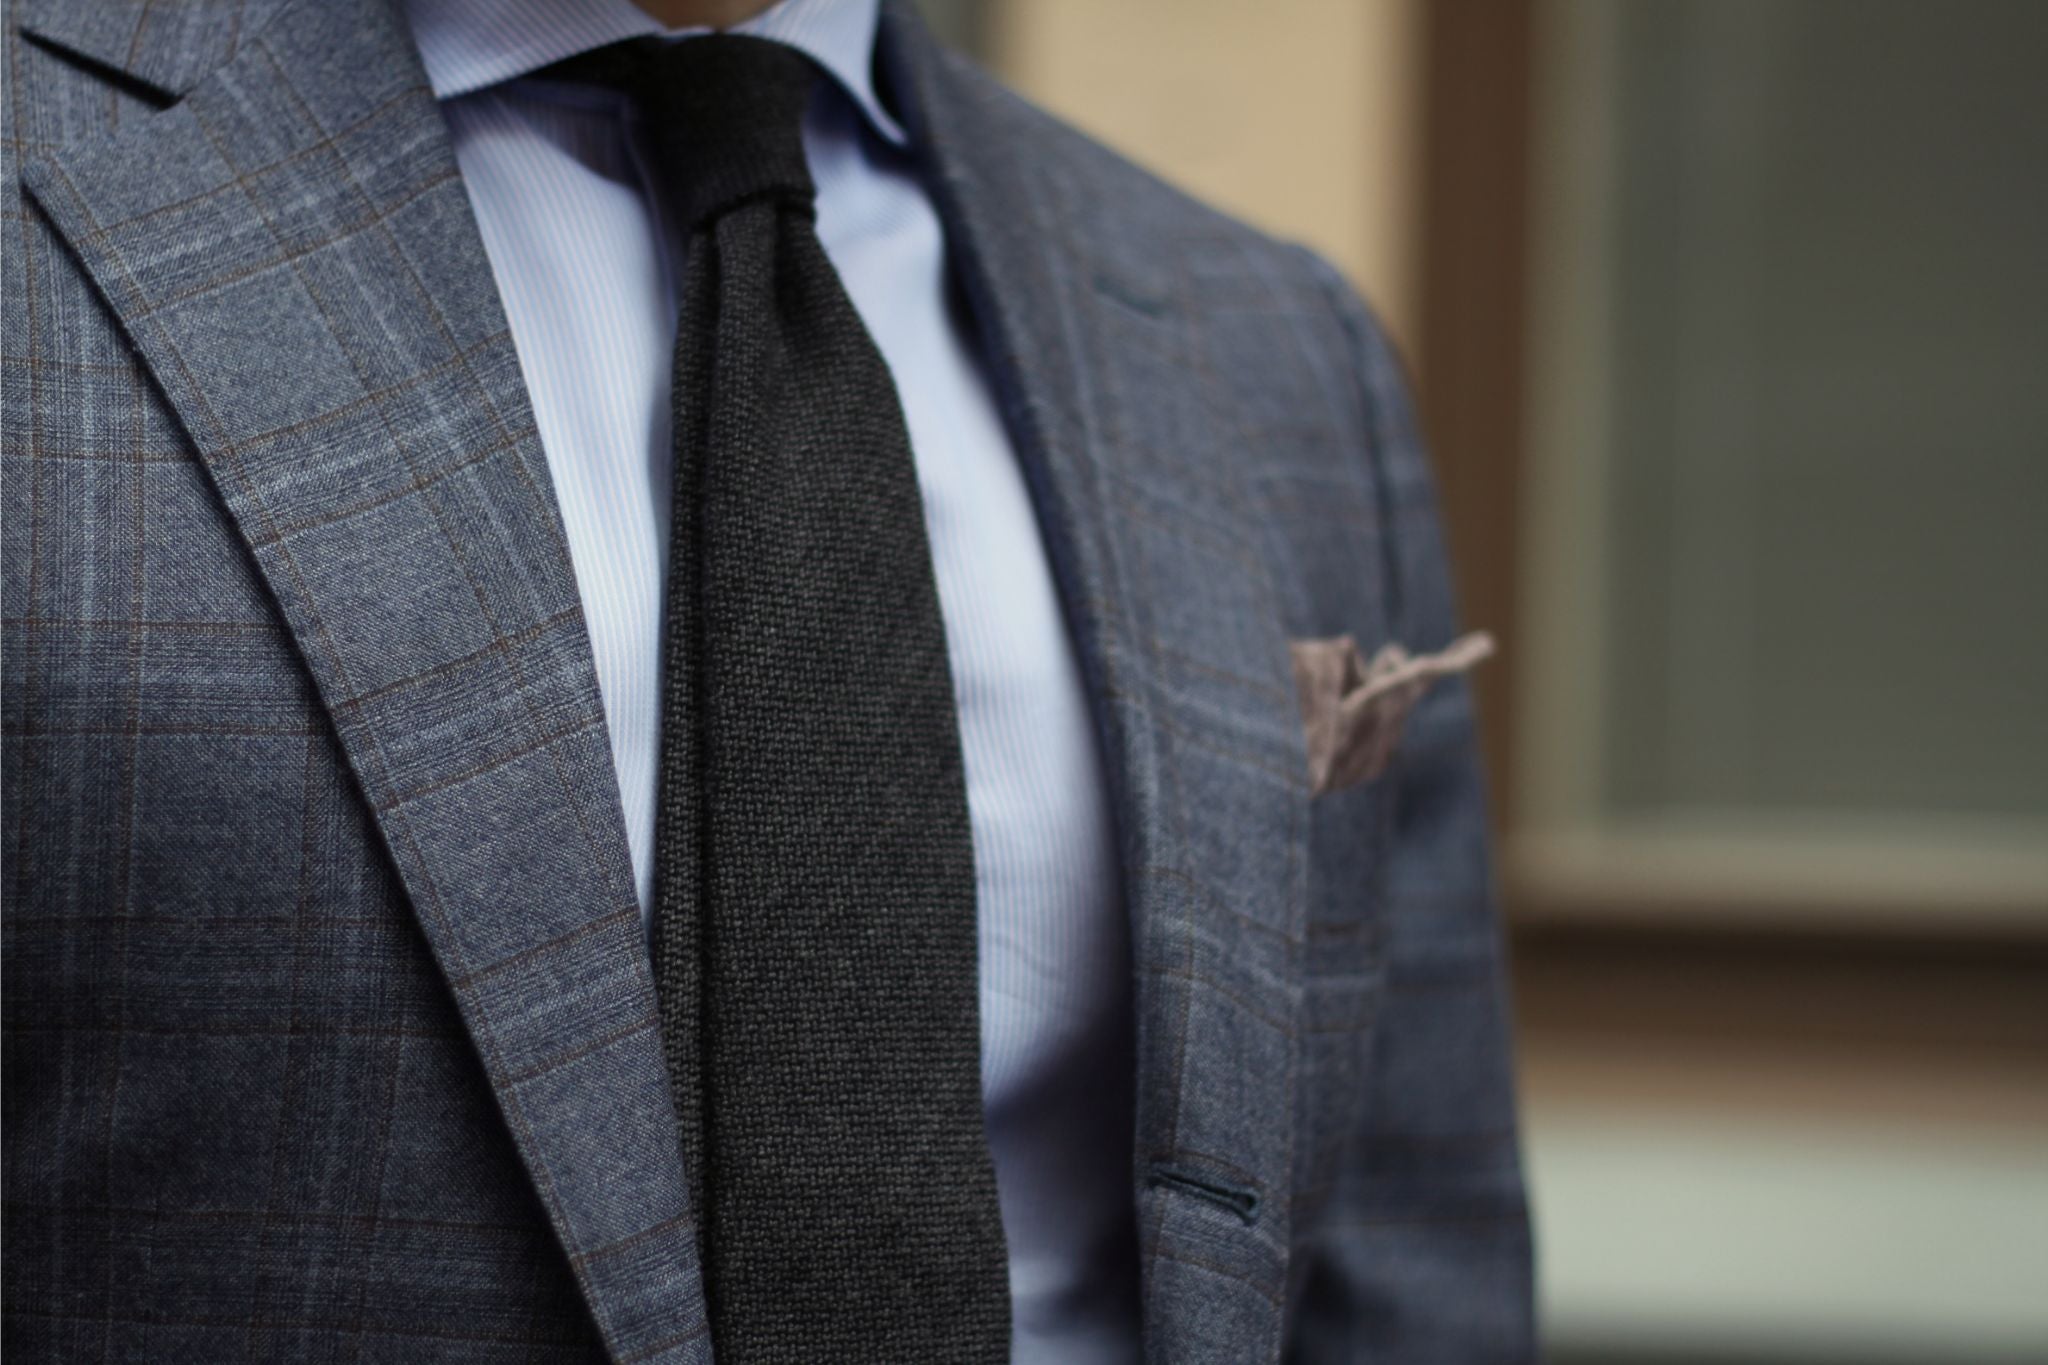 Dark gray tie with business suit - textures of gray cashmere tie